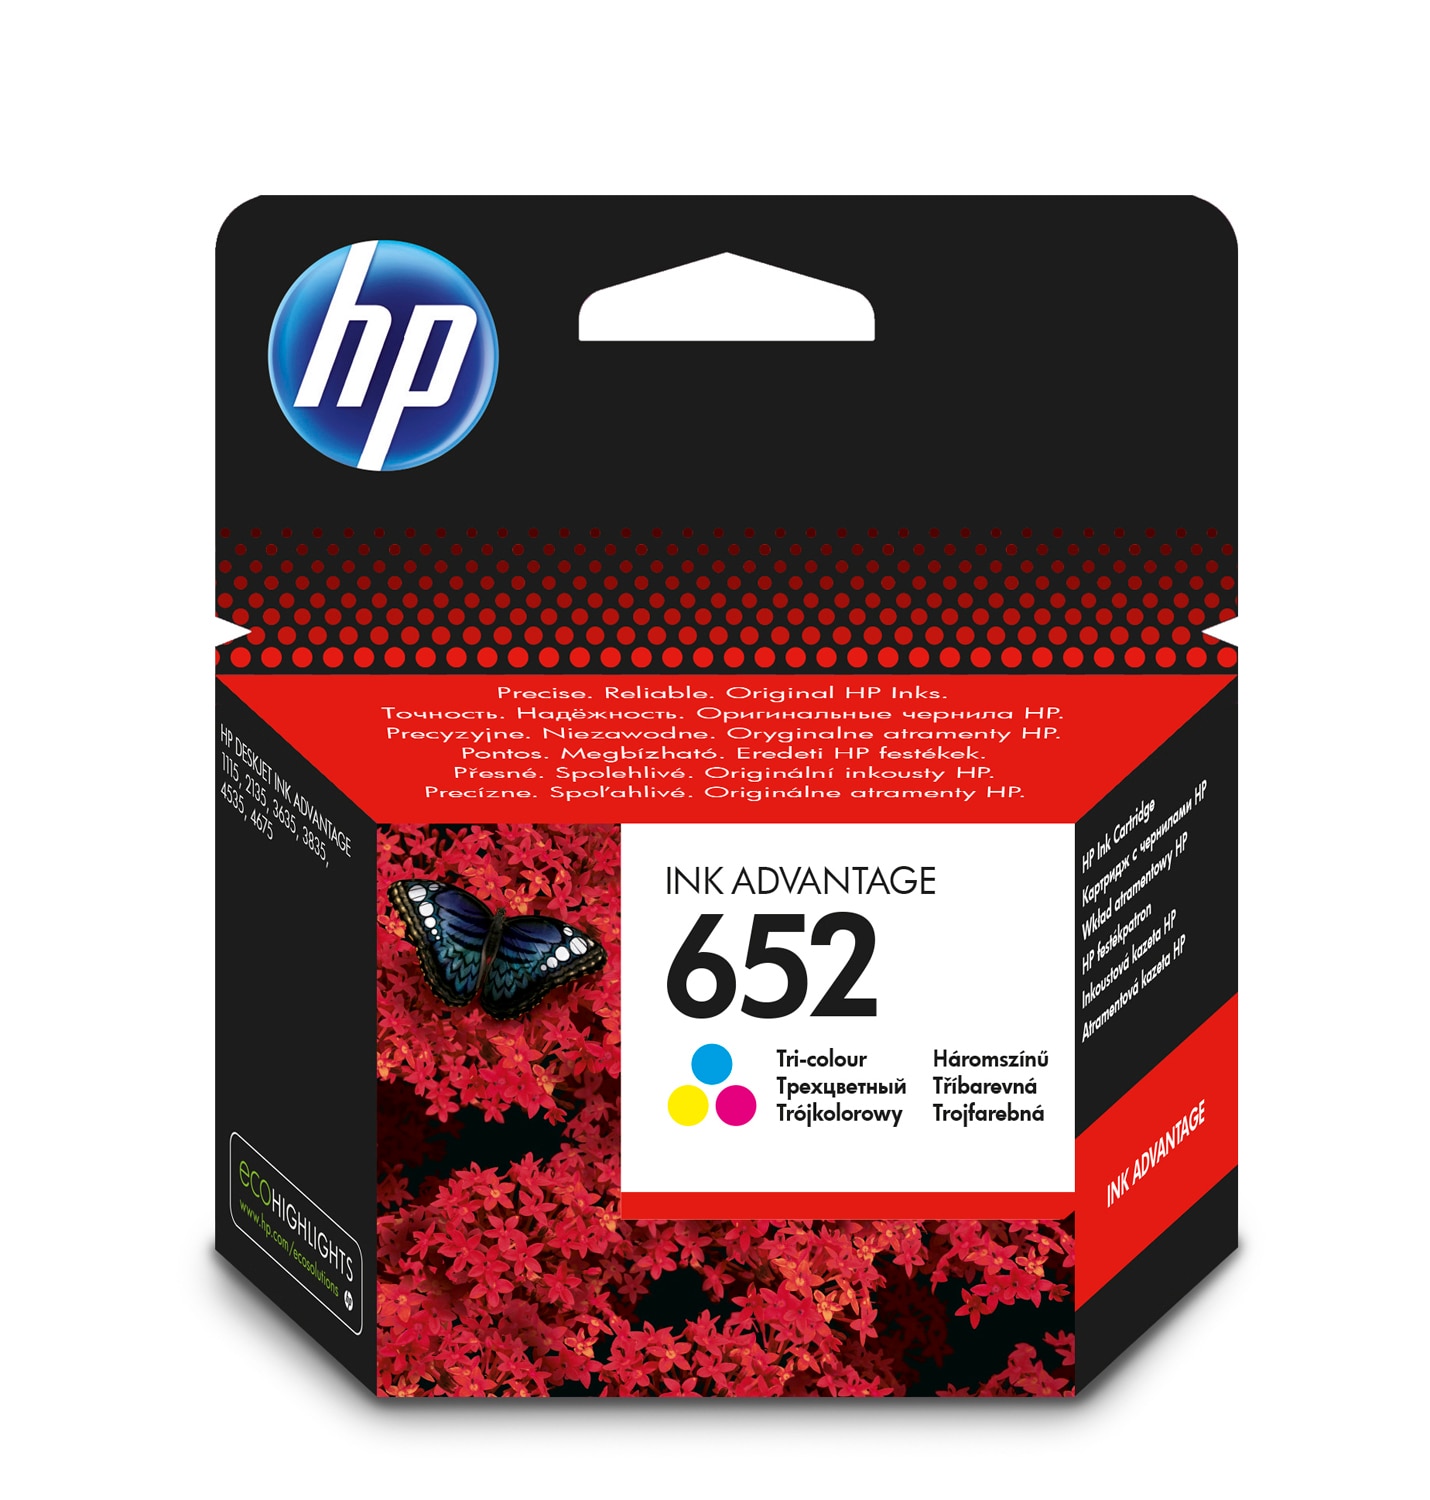 HP 652 Ink Advantage Tri Colour Printer Cartridge Original F6V24AE Sin